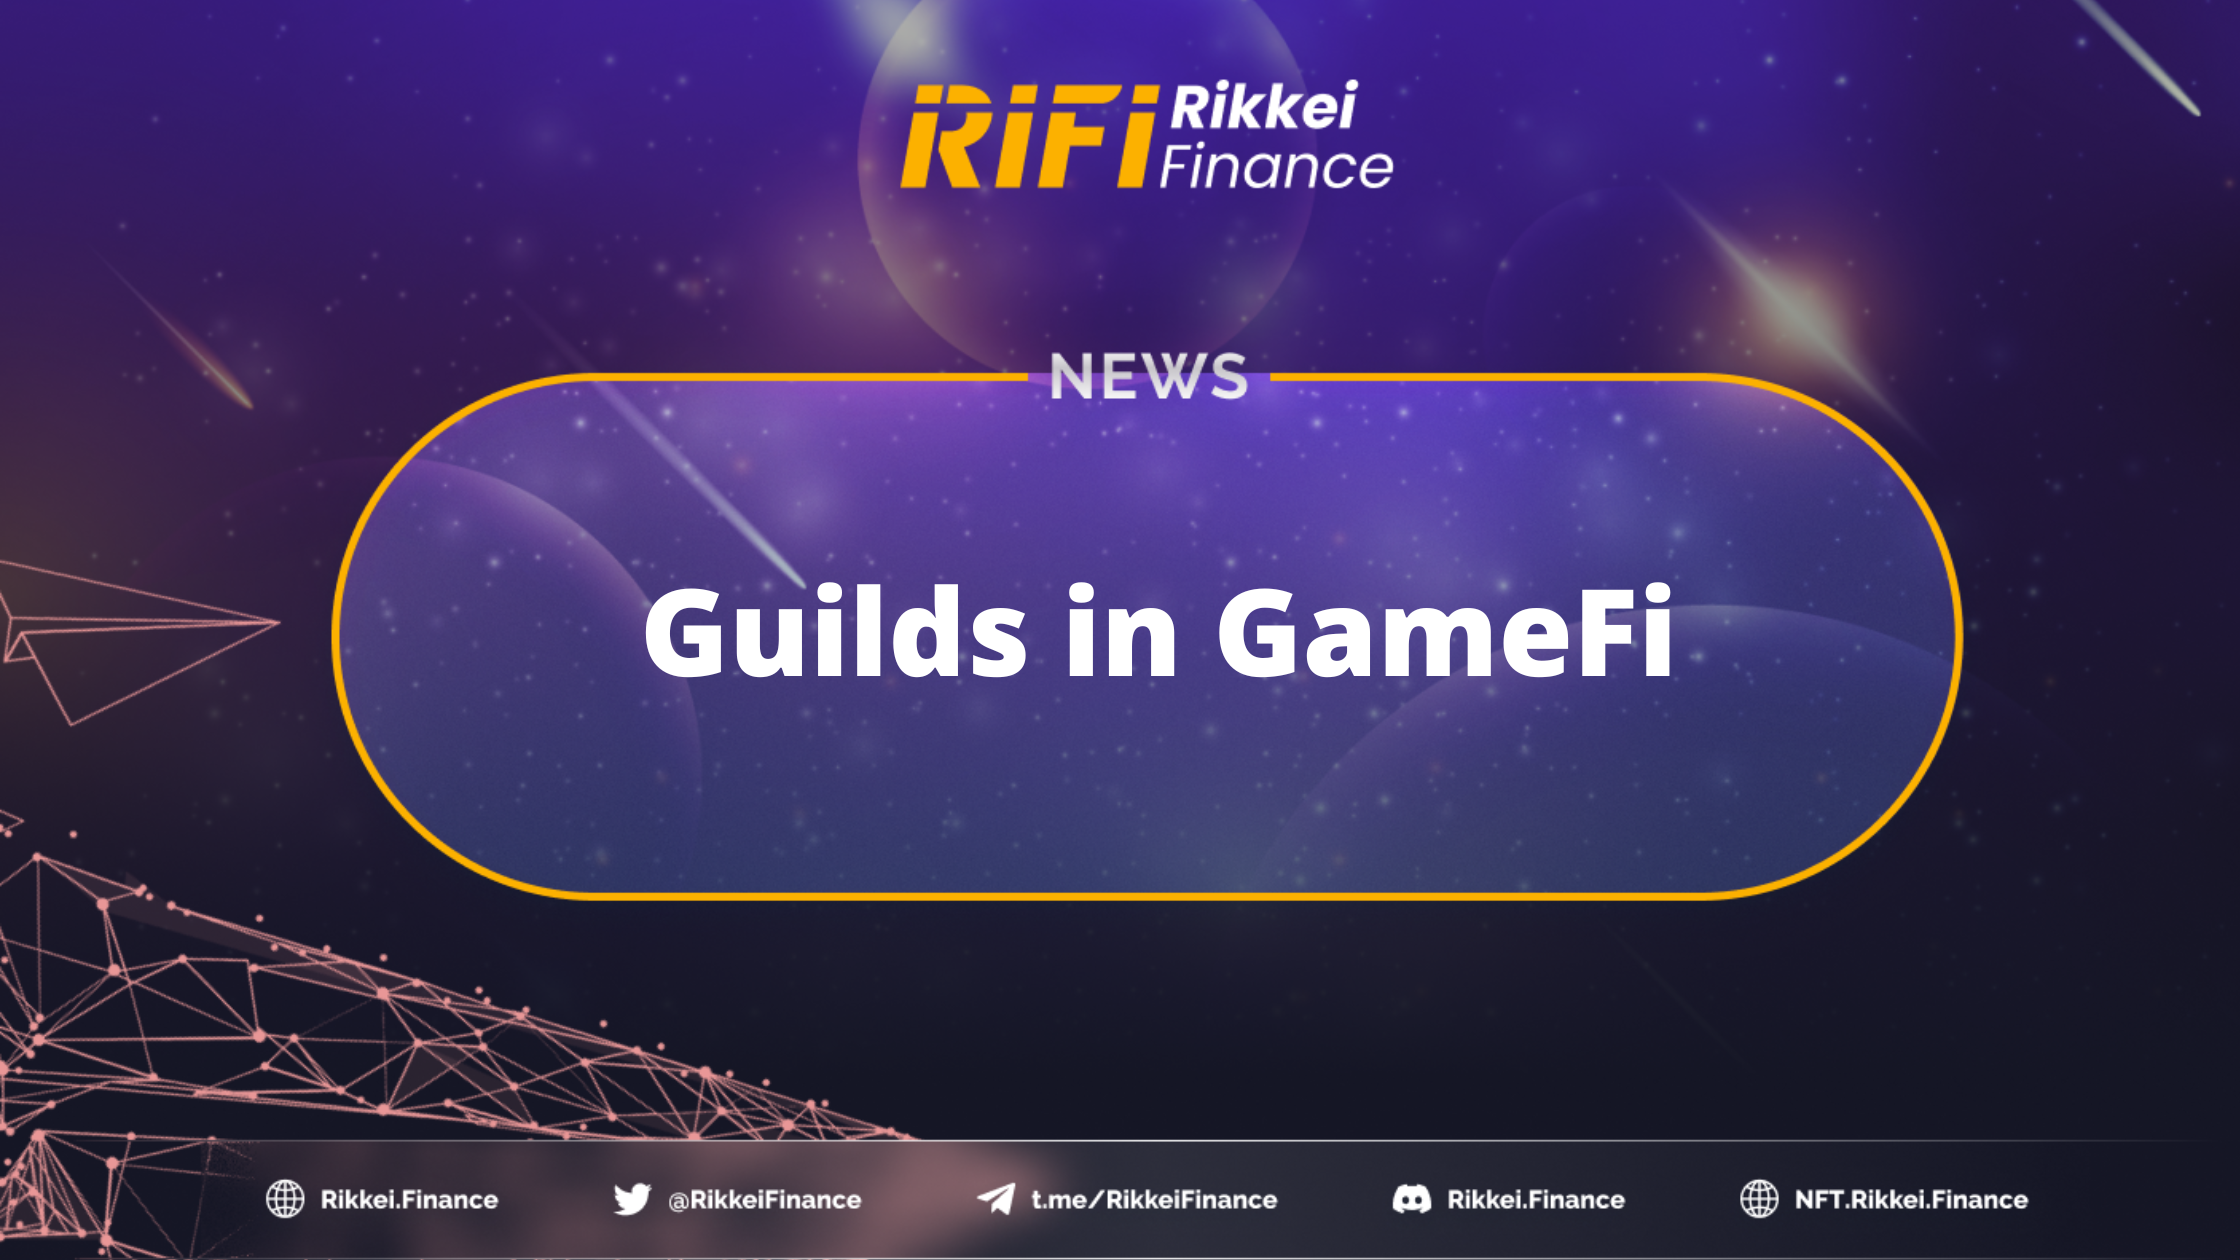 Guilds in GameFi